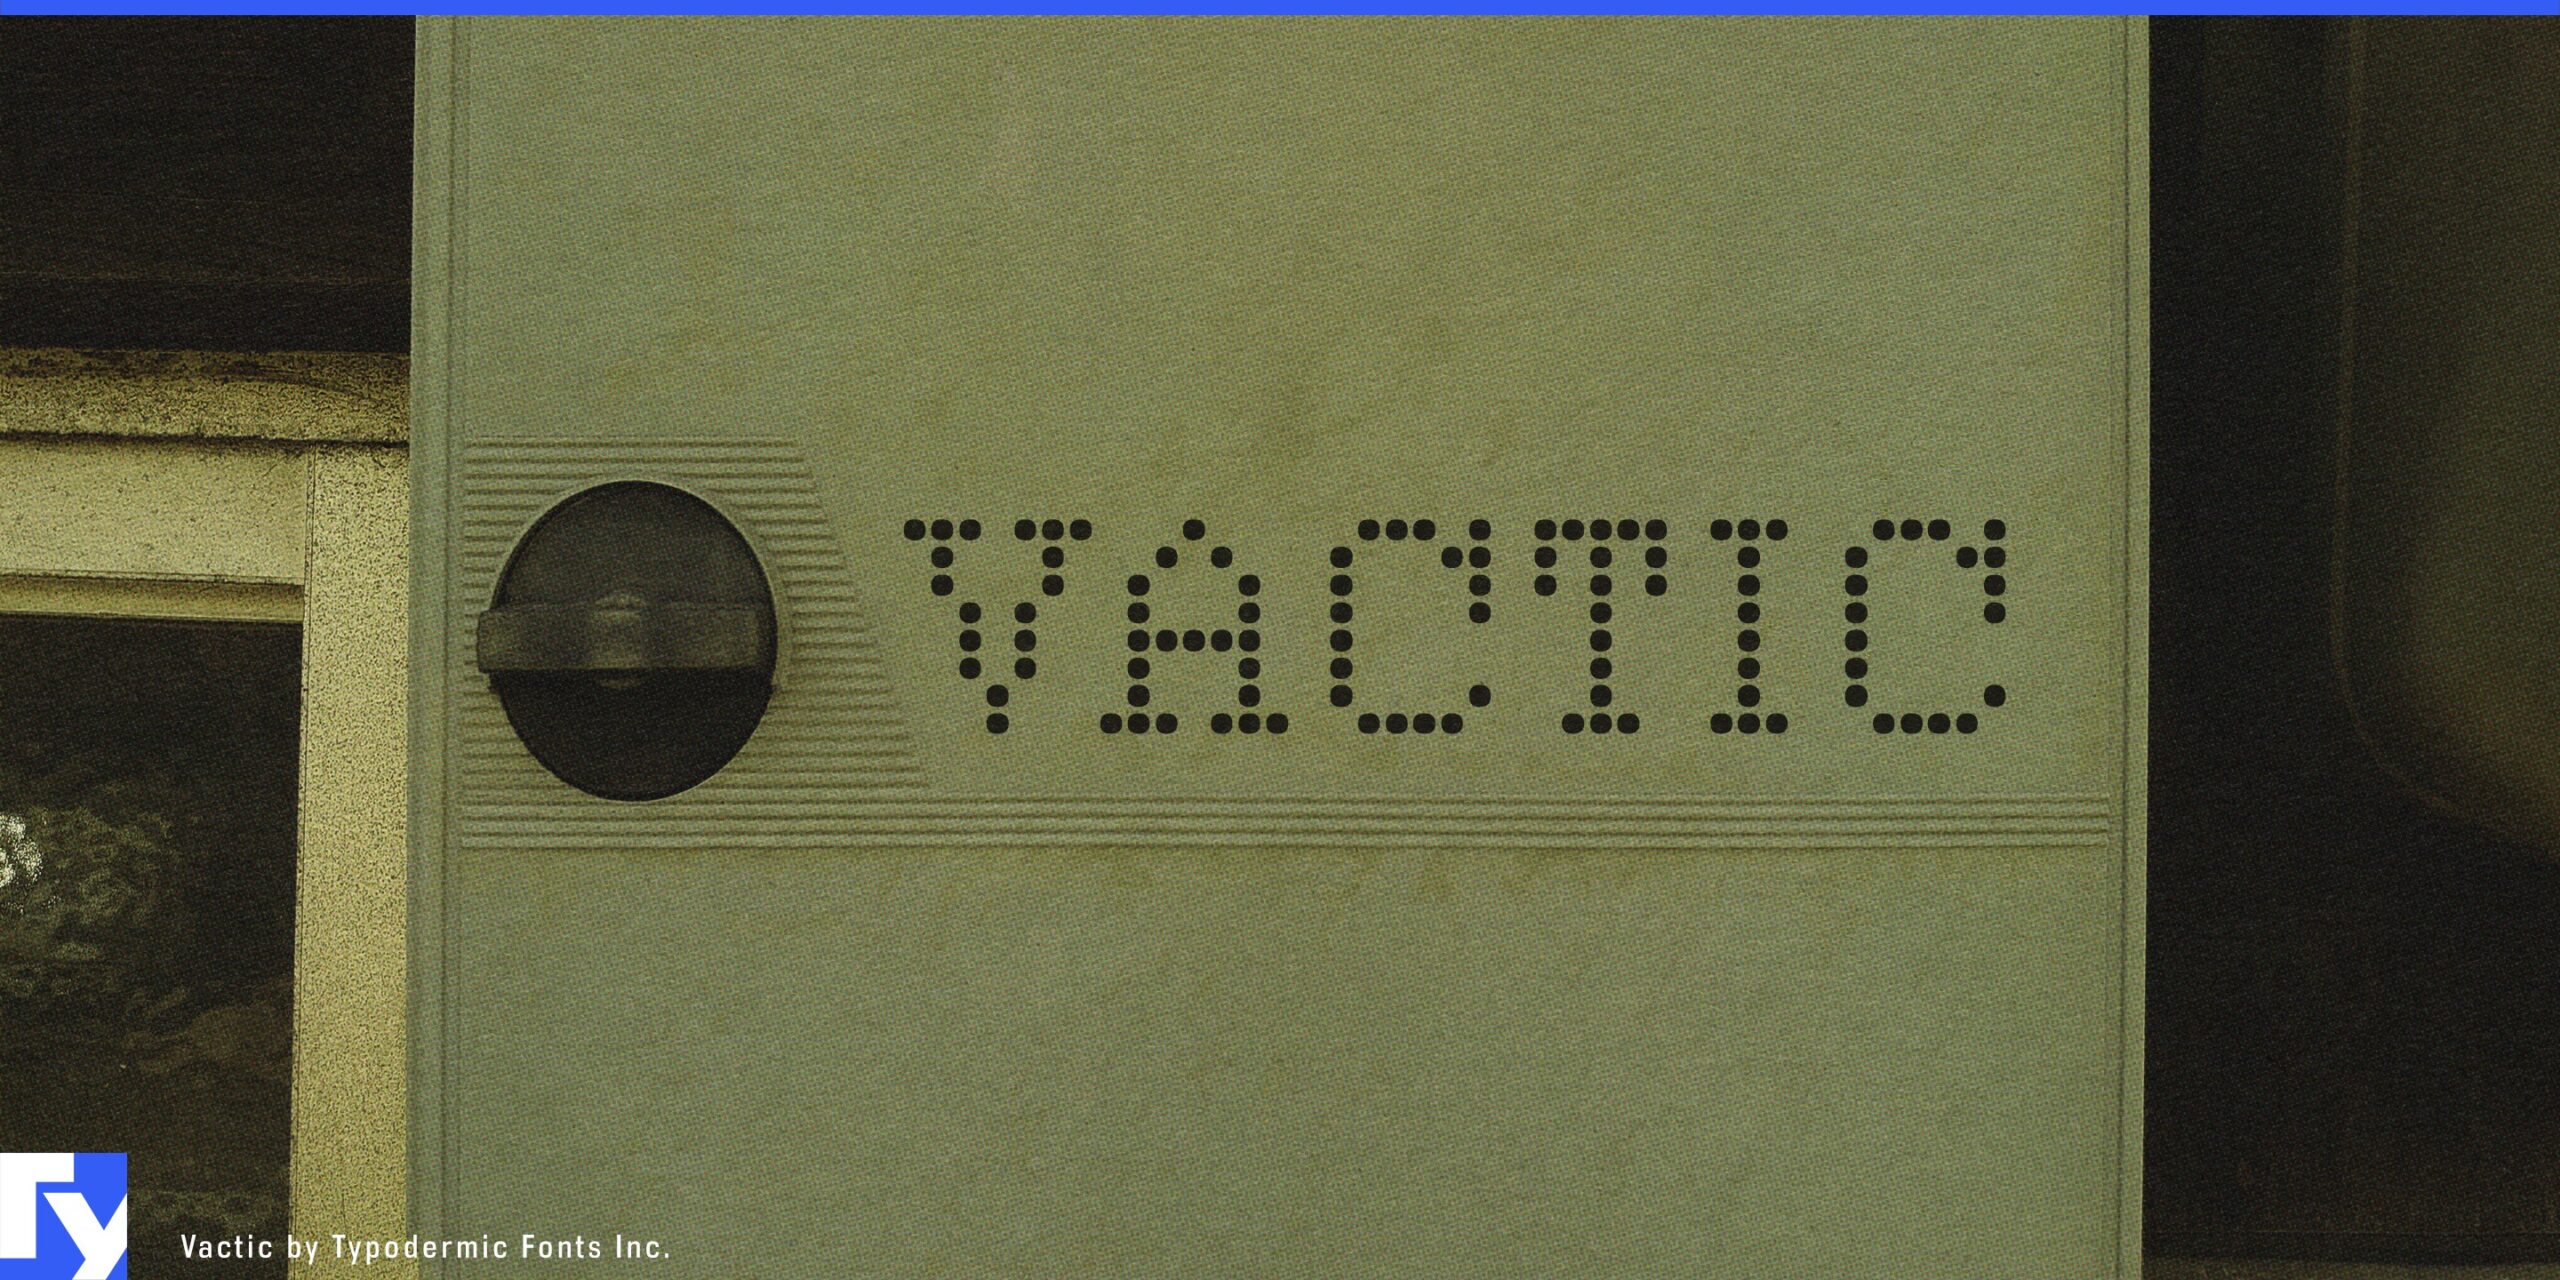 Timeless Charm: Vactic Typeface's Keen Sense of Nostalgia.